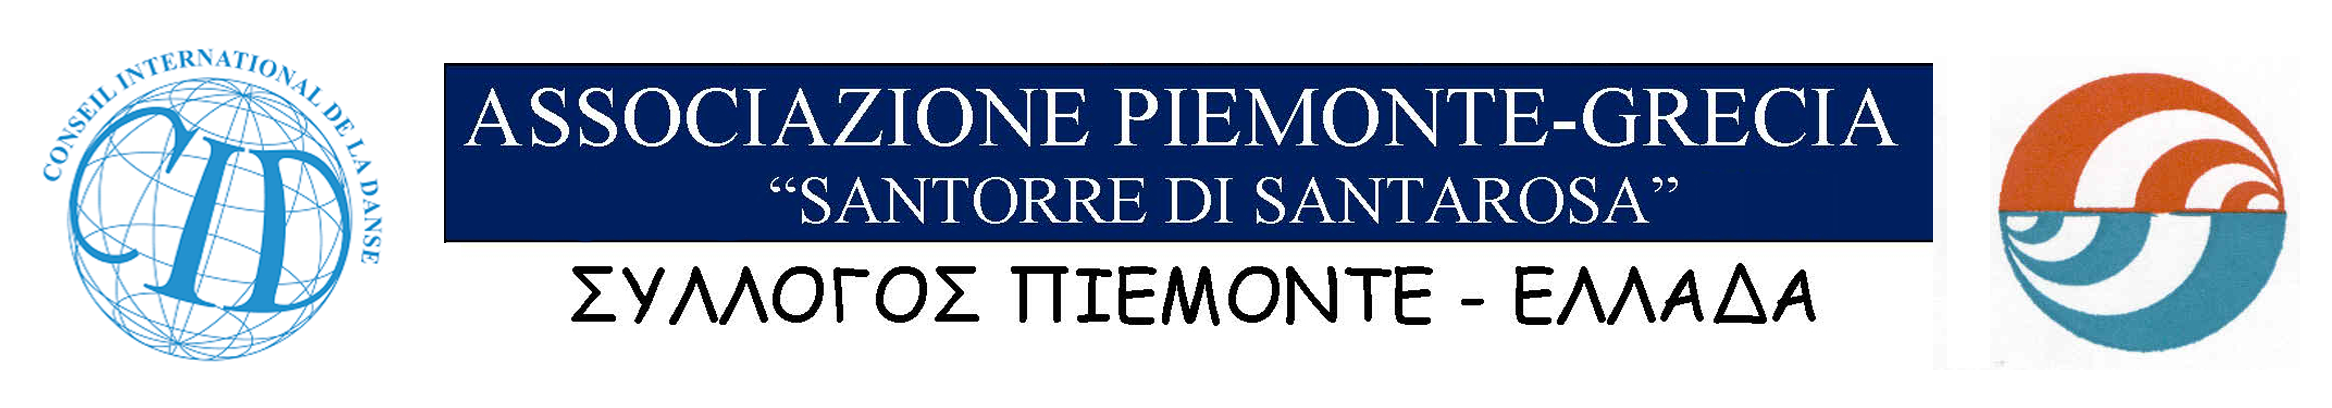 Associazione Piemonte-Grecia TEST 1 Logo